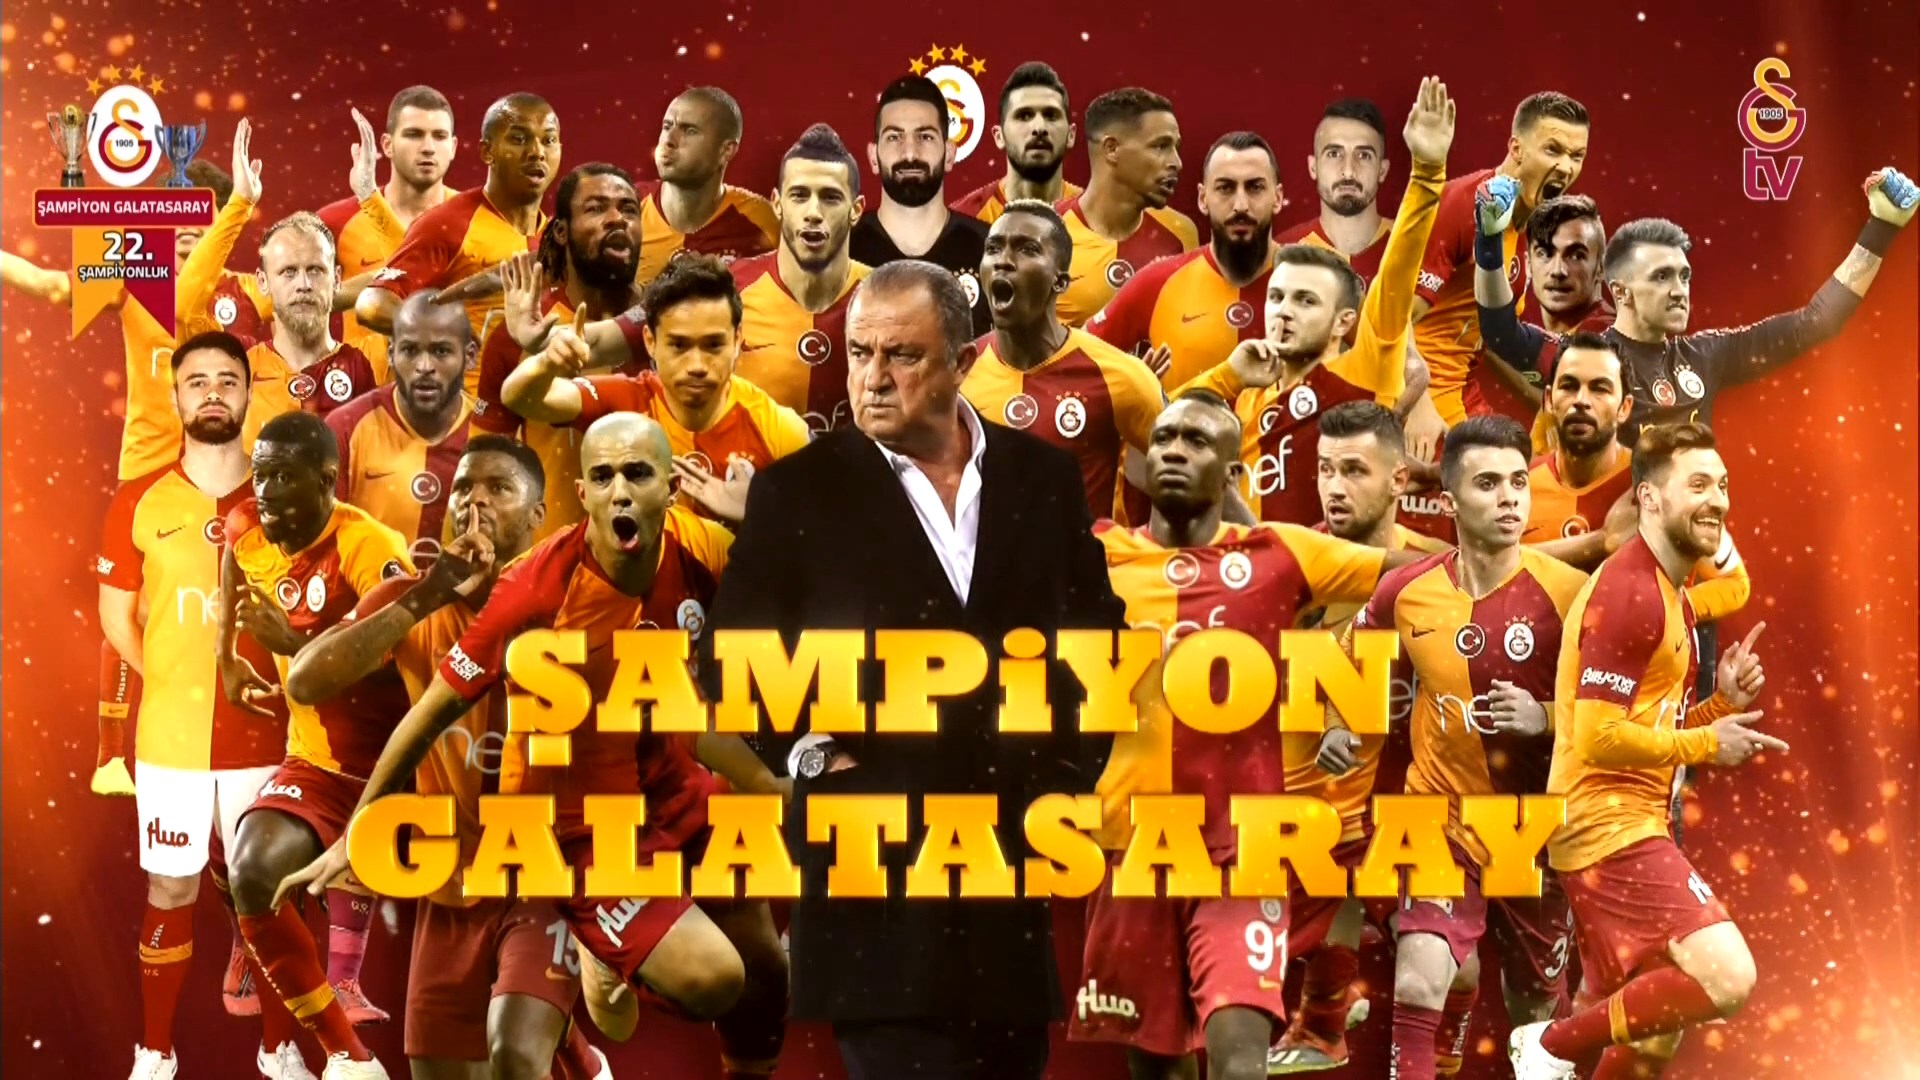 Galatasaray000222333111888777